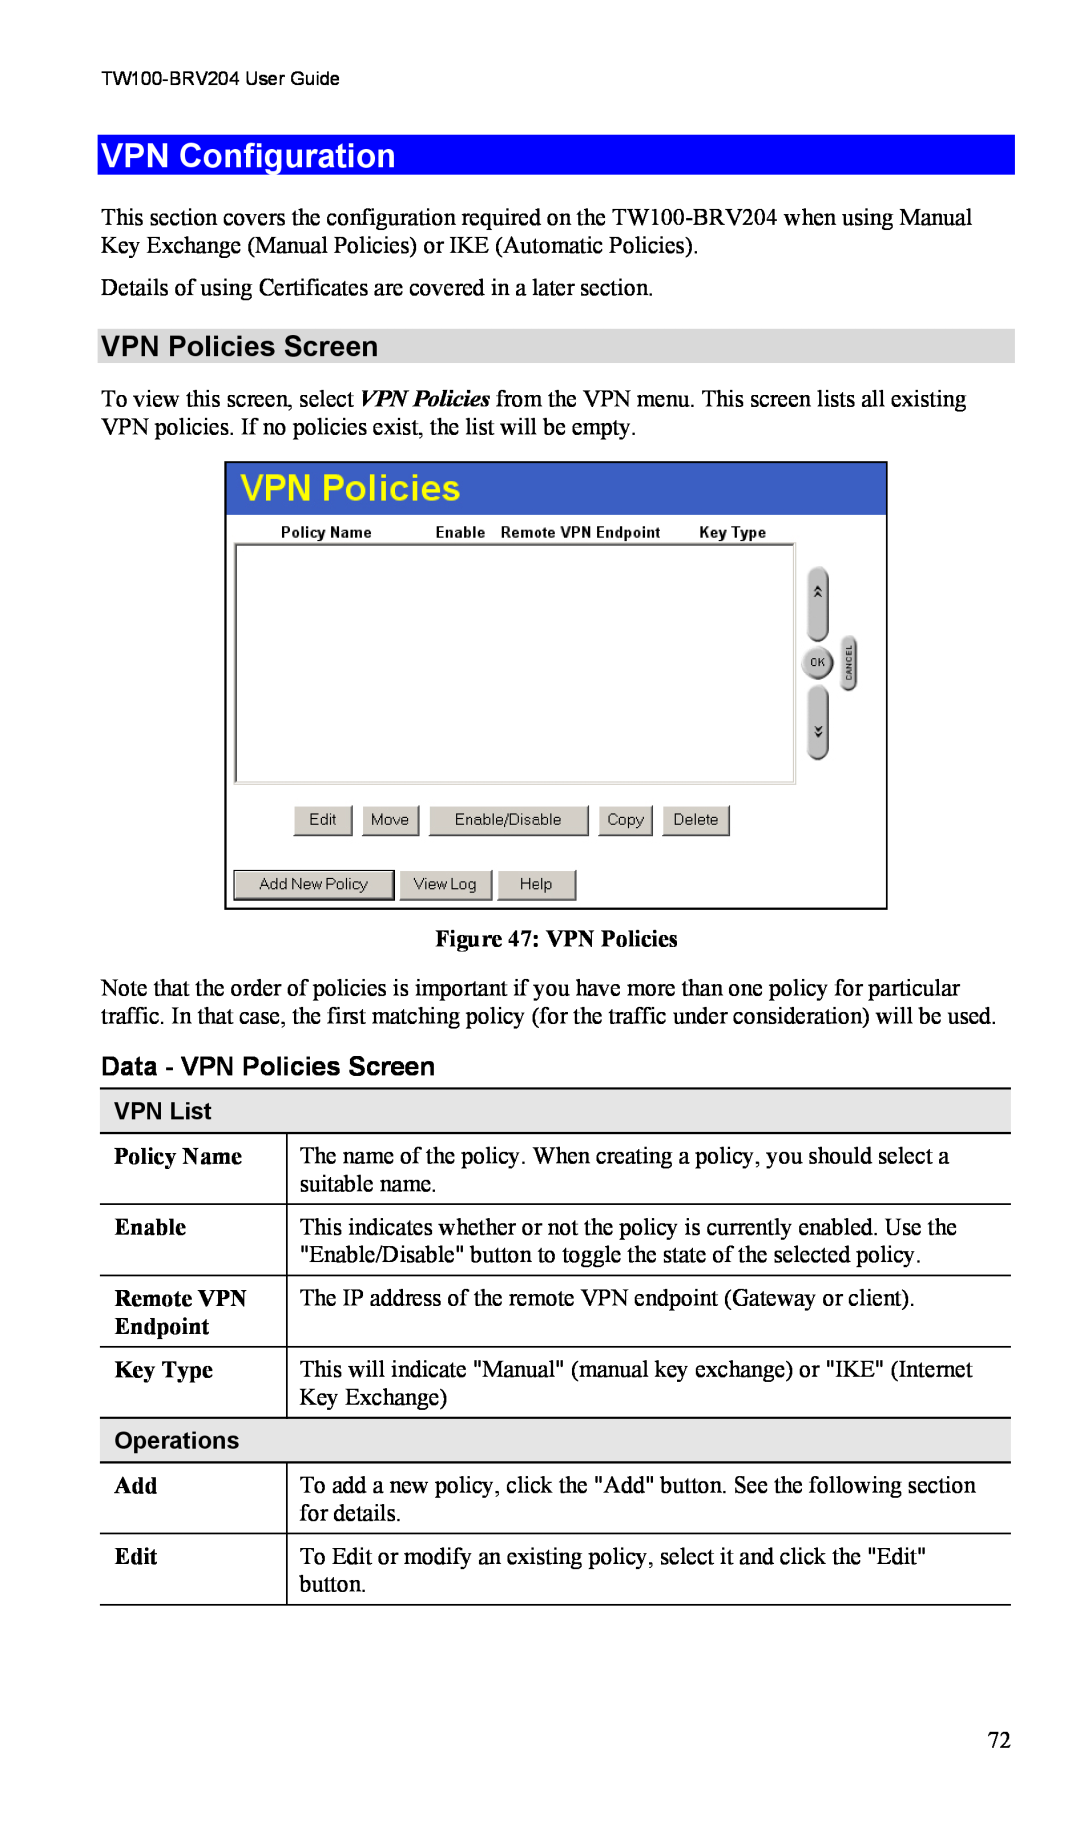 TRENDnet VPN Firewall Router, TW100-BRV204 manual VPN Configuration, VPN Policies Screen, VPN List, Operations 